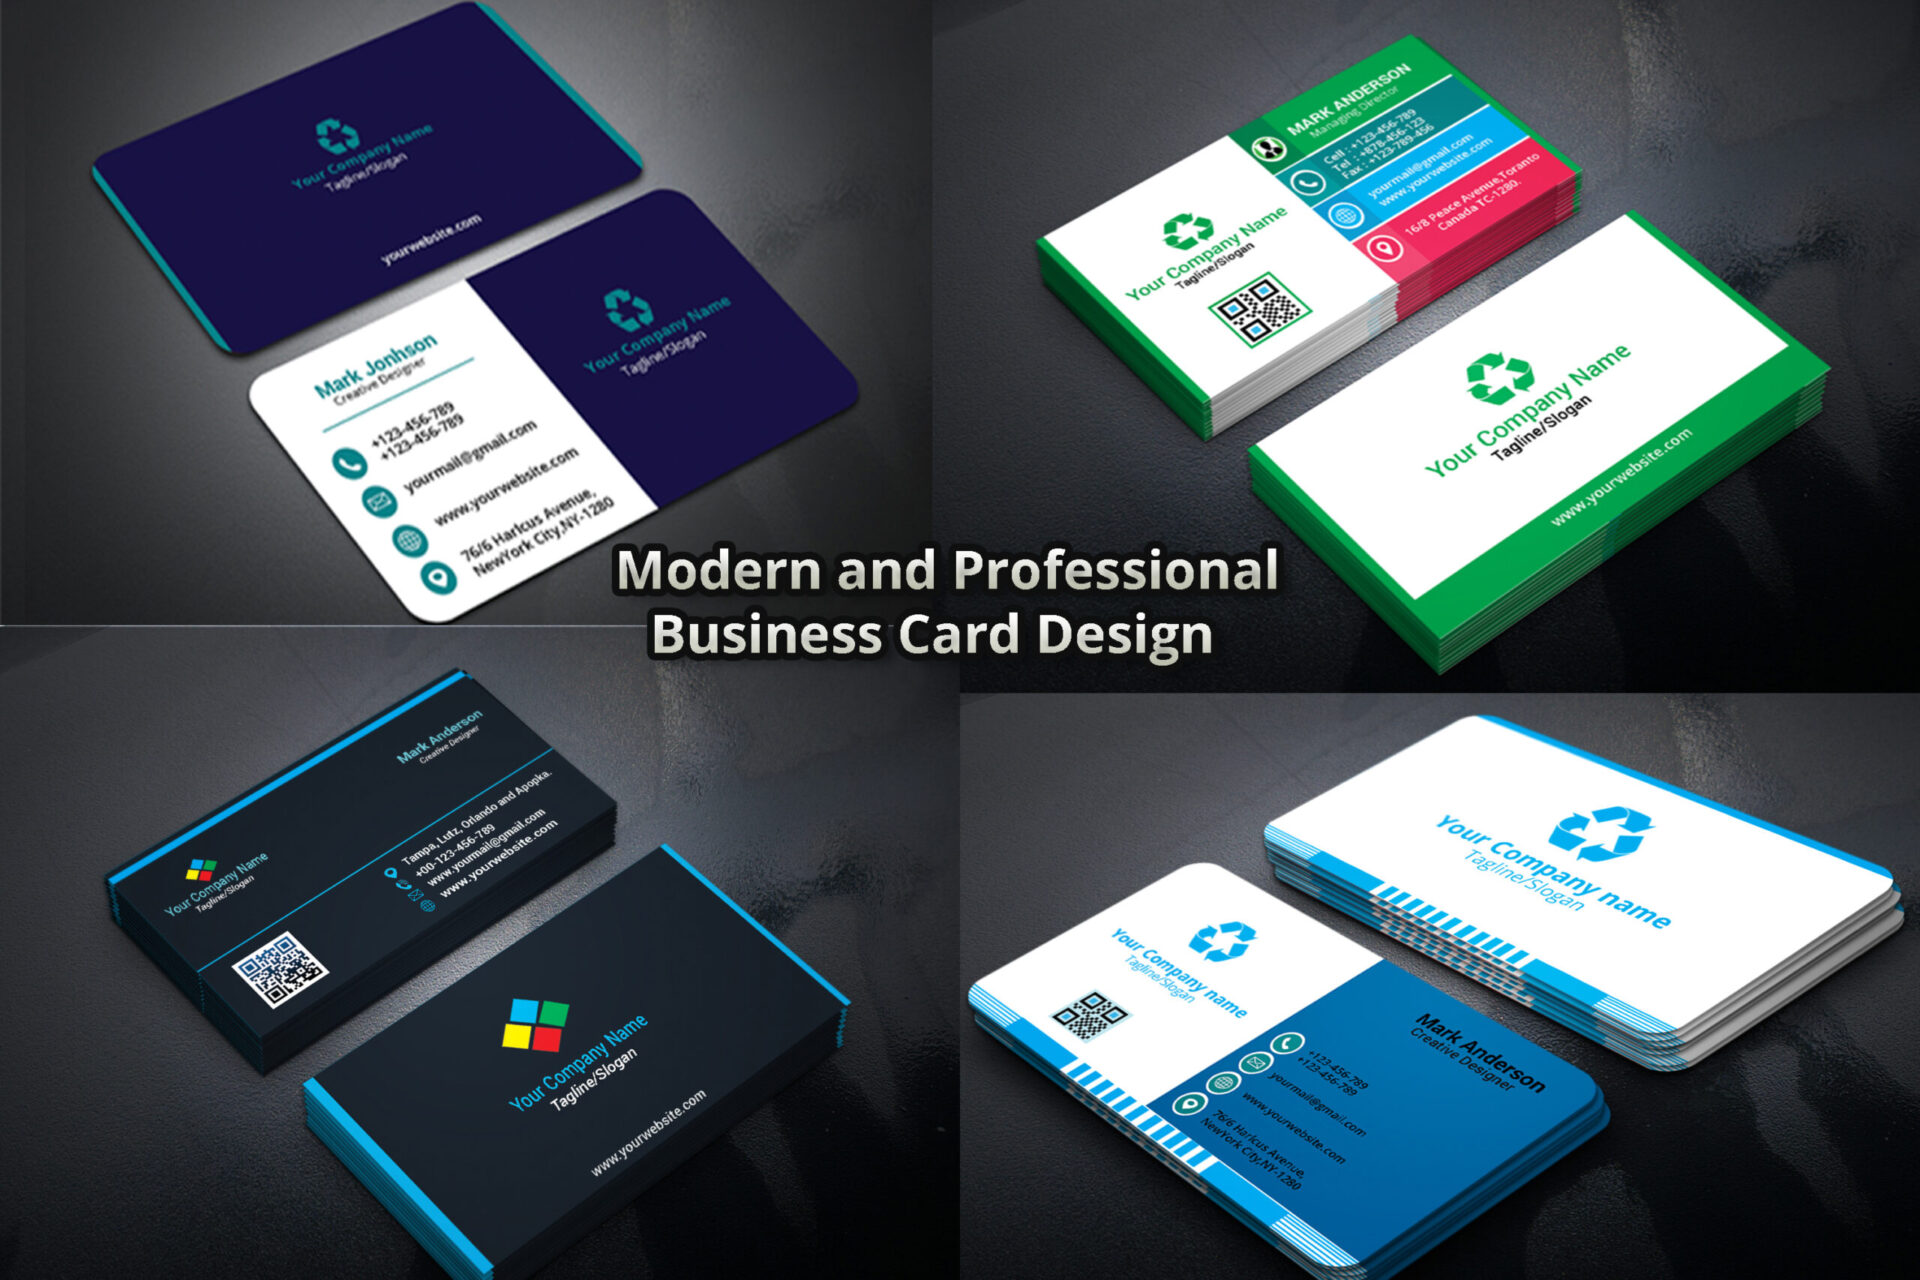 Business Card Design || Graphics Design Services || Visiting Card || PixelGraphics || PixelGraphics24